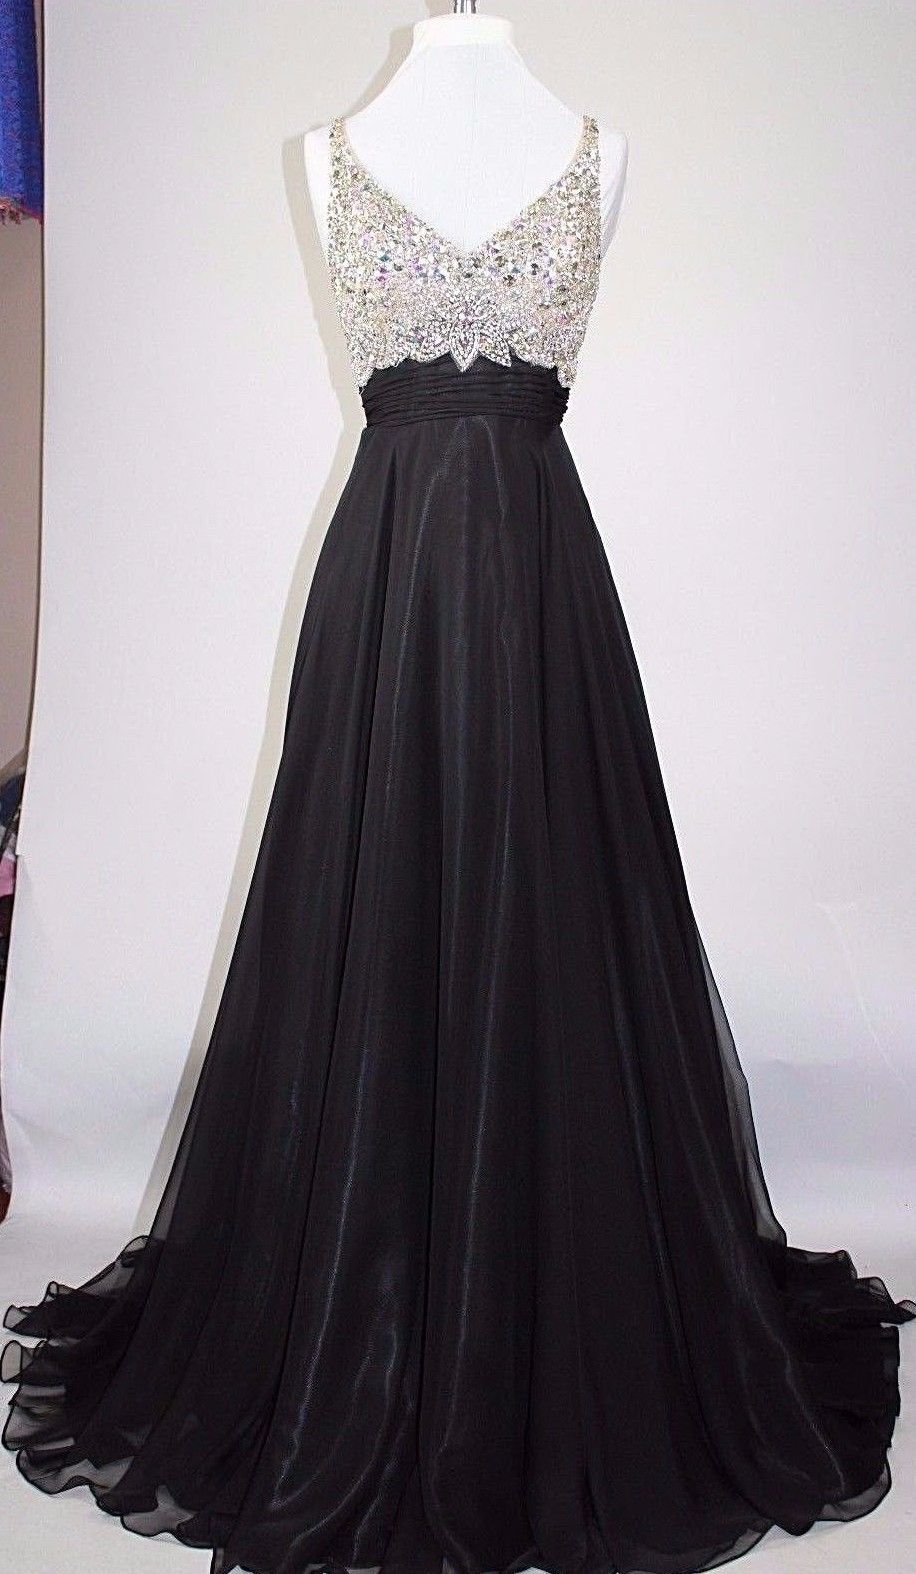 2018 Black Prom Dresses Long Elegant Backless Beaded Evening Gowns - Formal Dresses, Party Dress